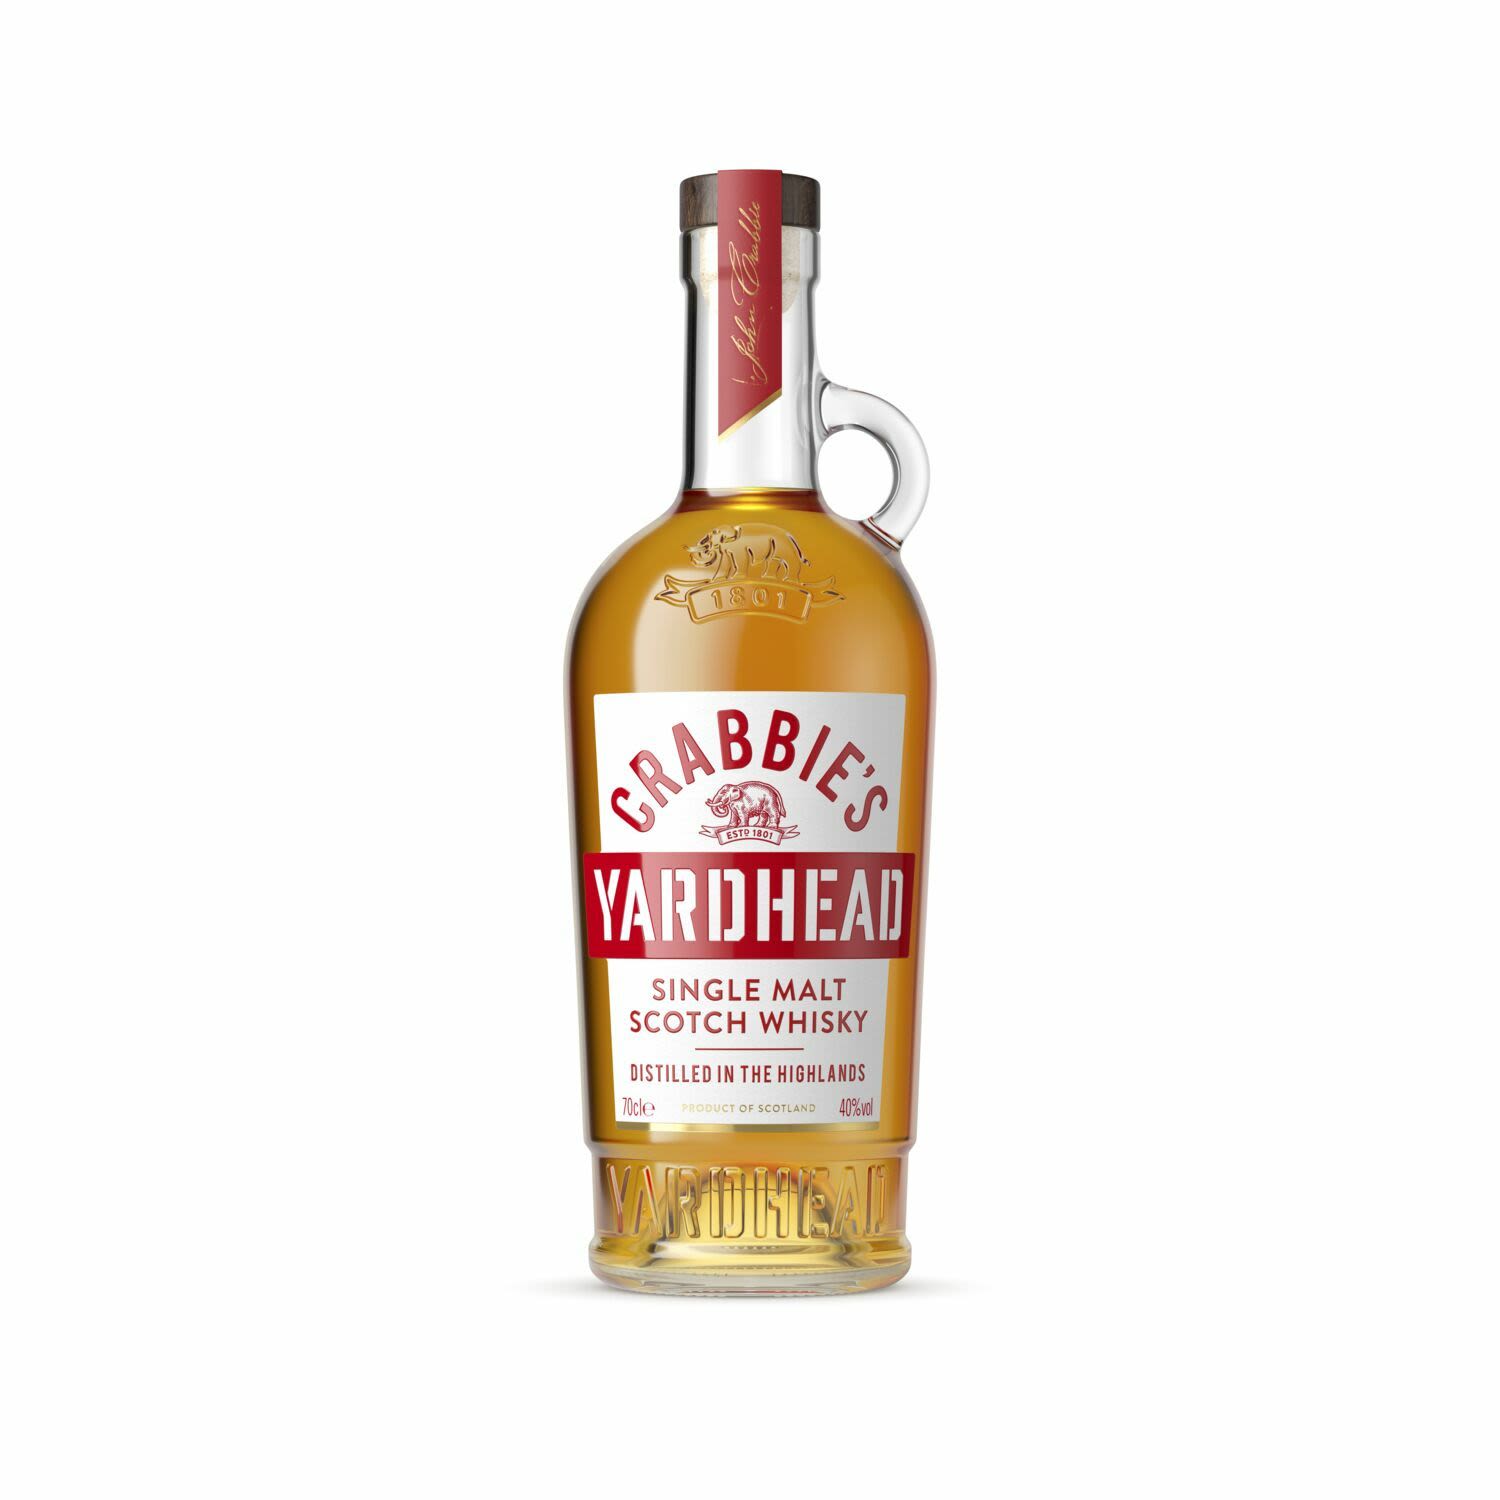 Crabbies Single Malt Scotch Whisky 700mL Bottle